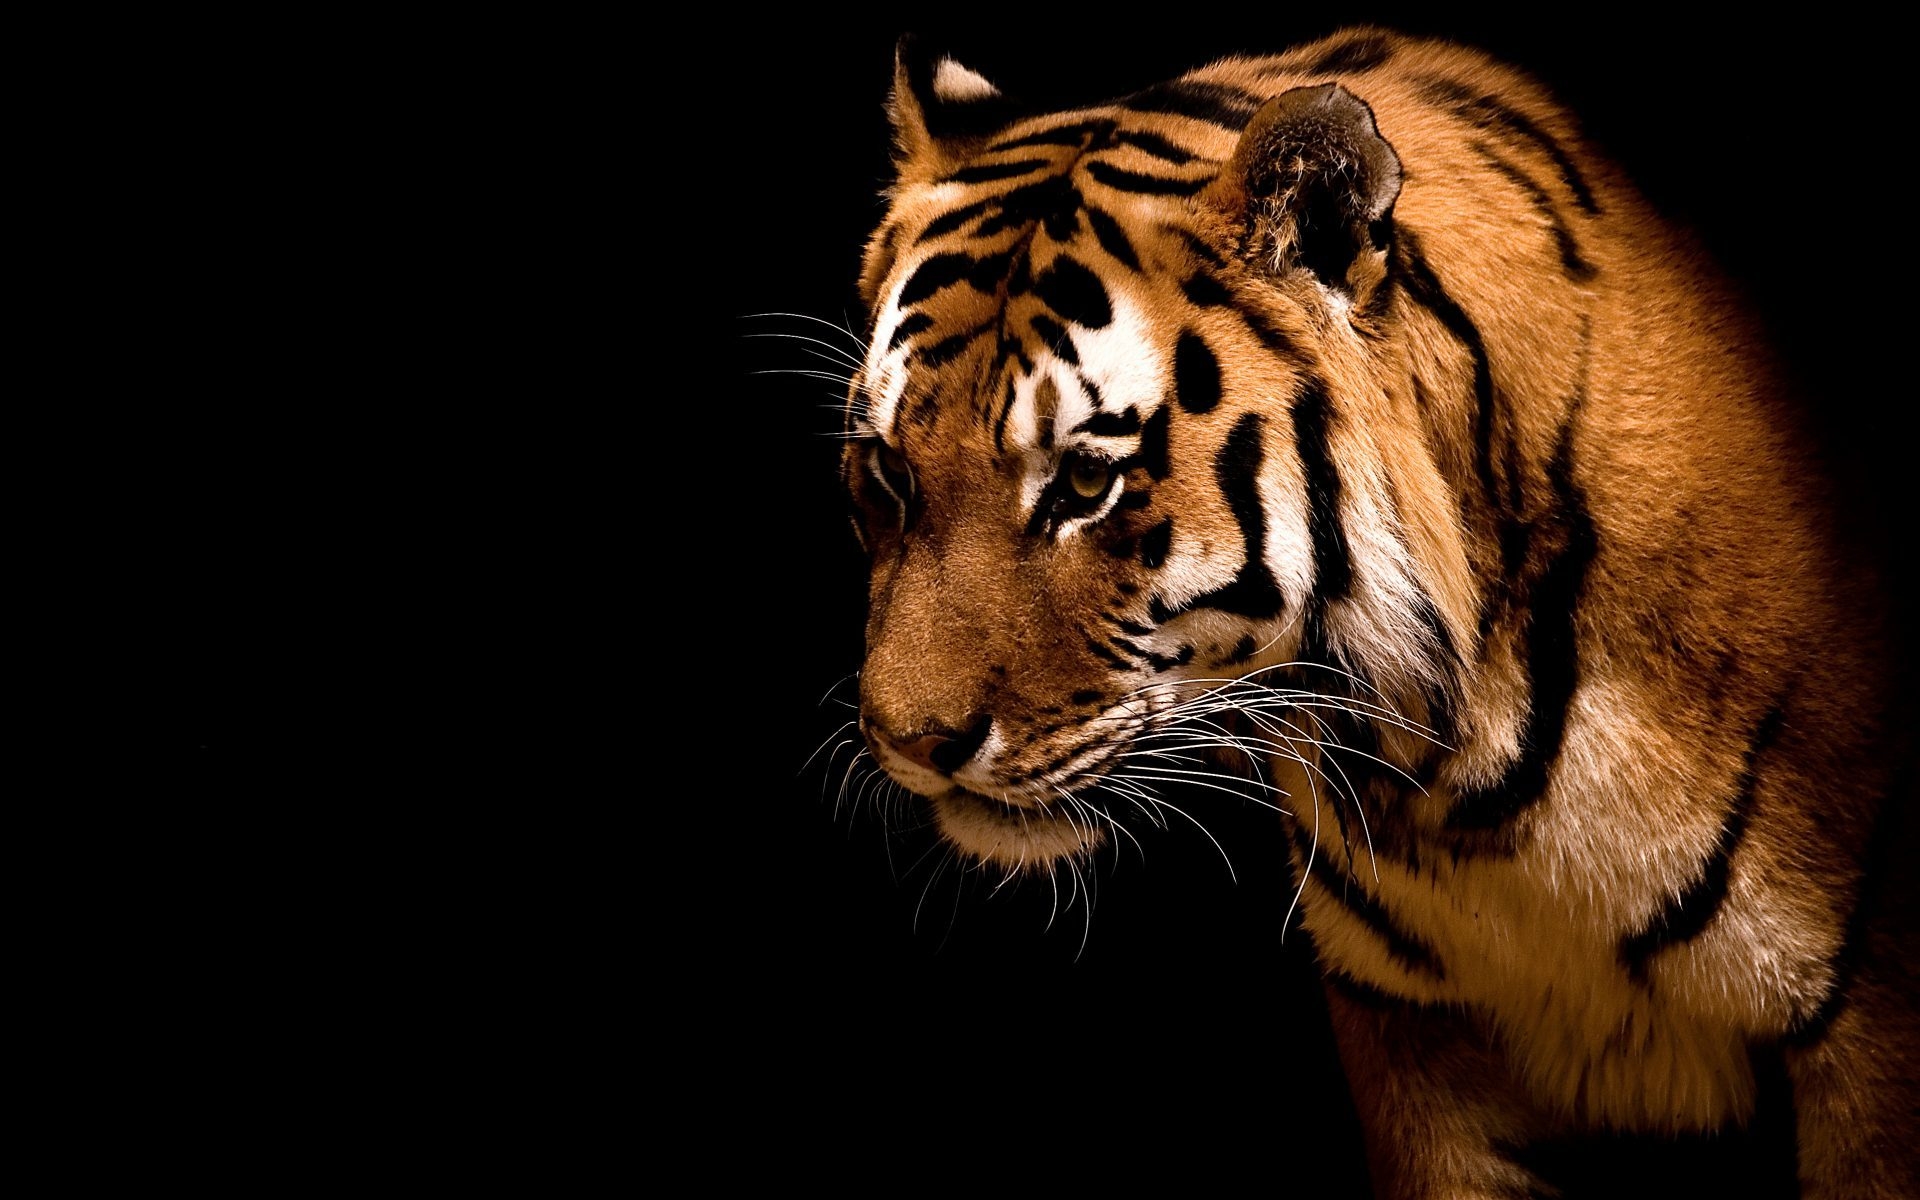 Impressive Tiger for 1920 x 1200 widescreen resolution